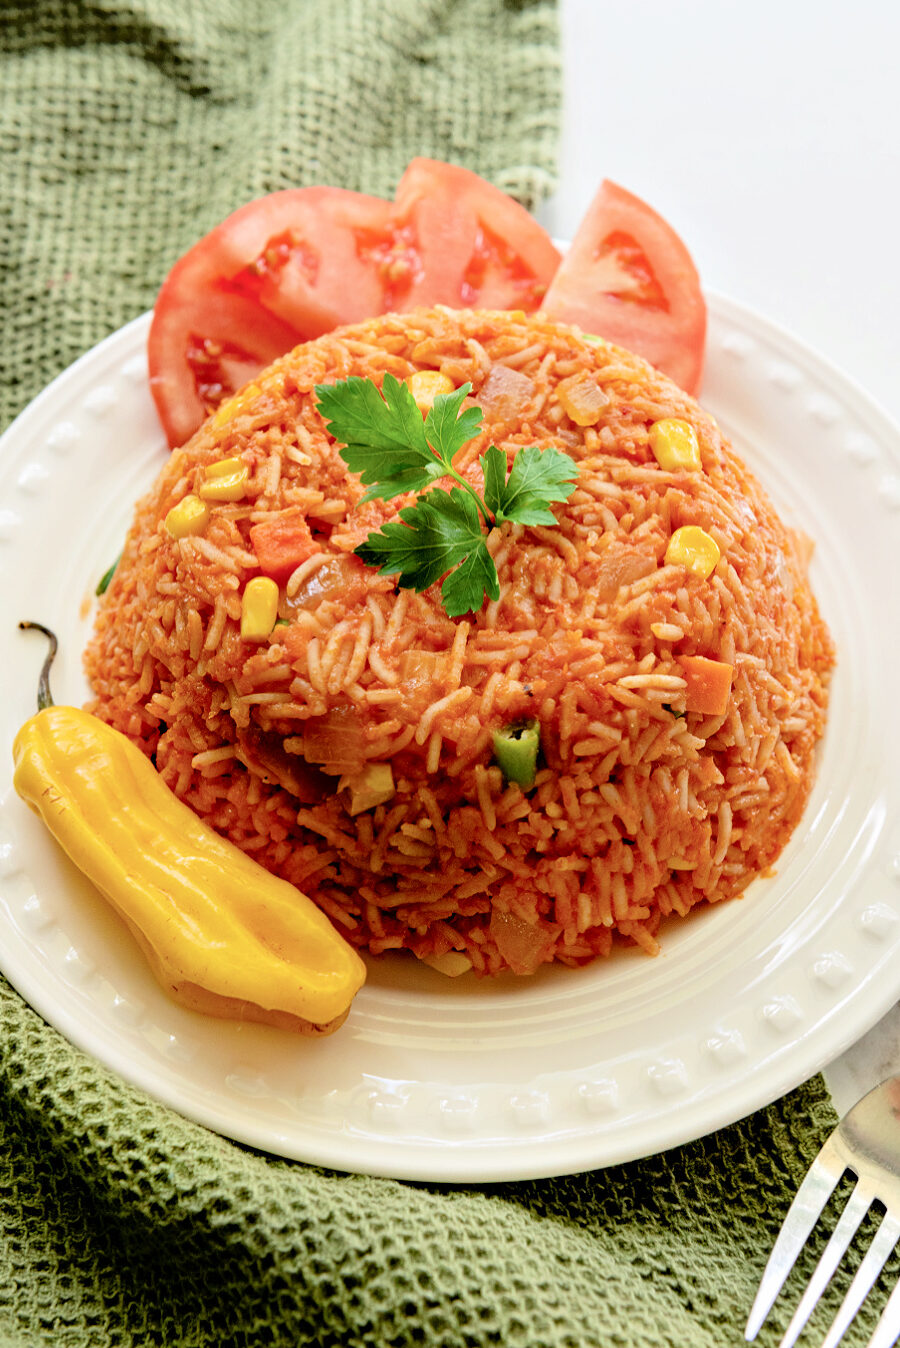 Receta de arroz frito nigeriano